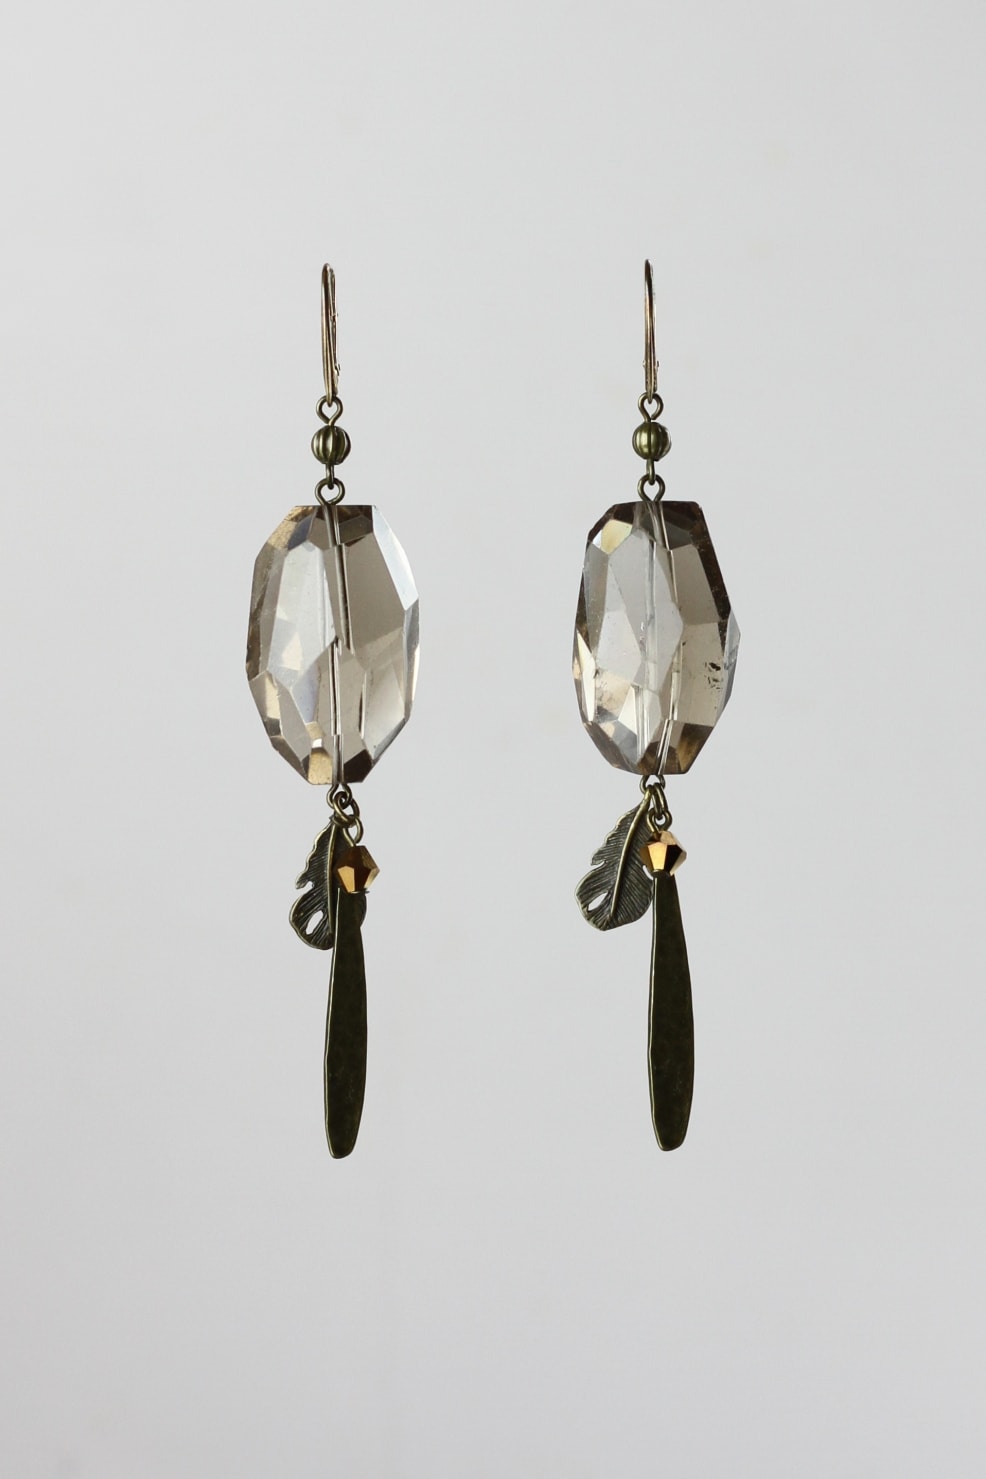 Smoky quartz and oxidized silver earrings